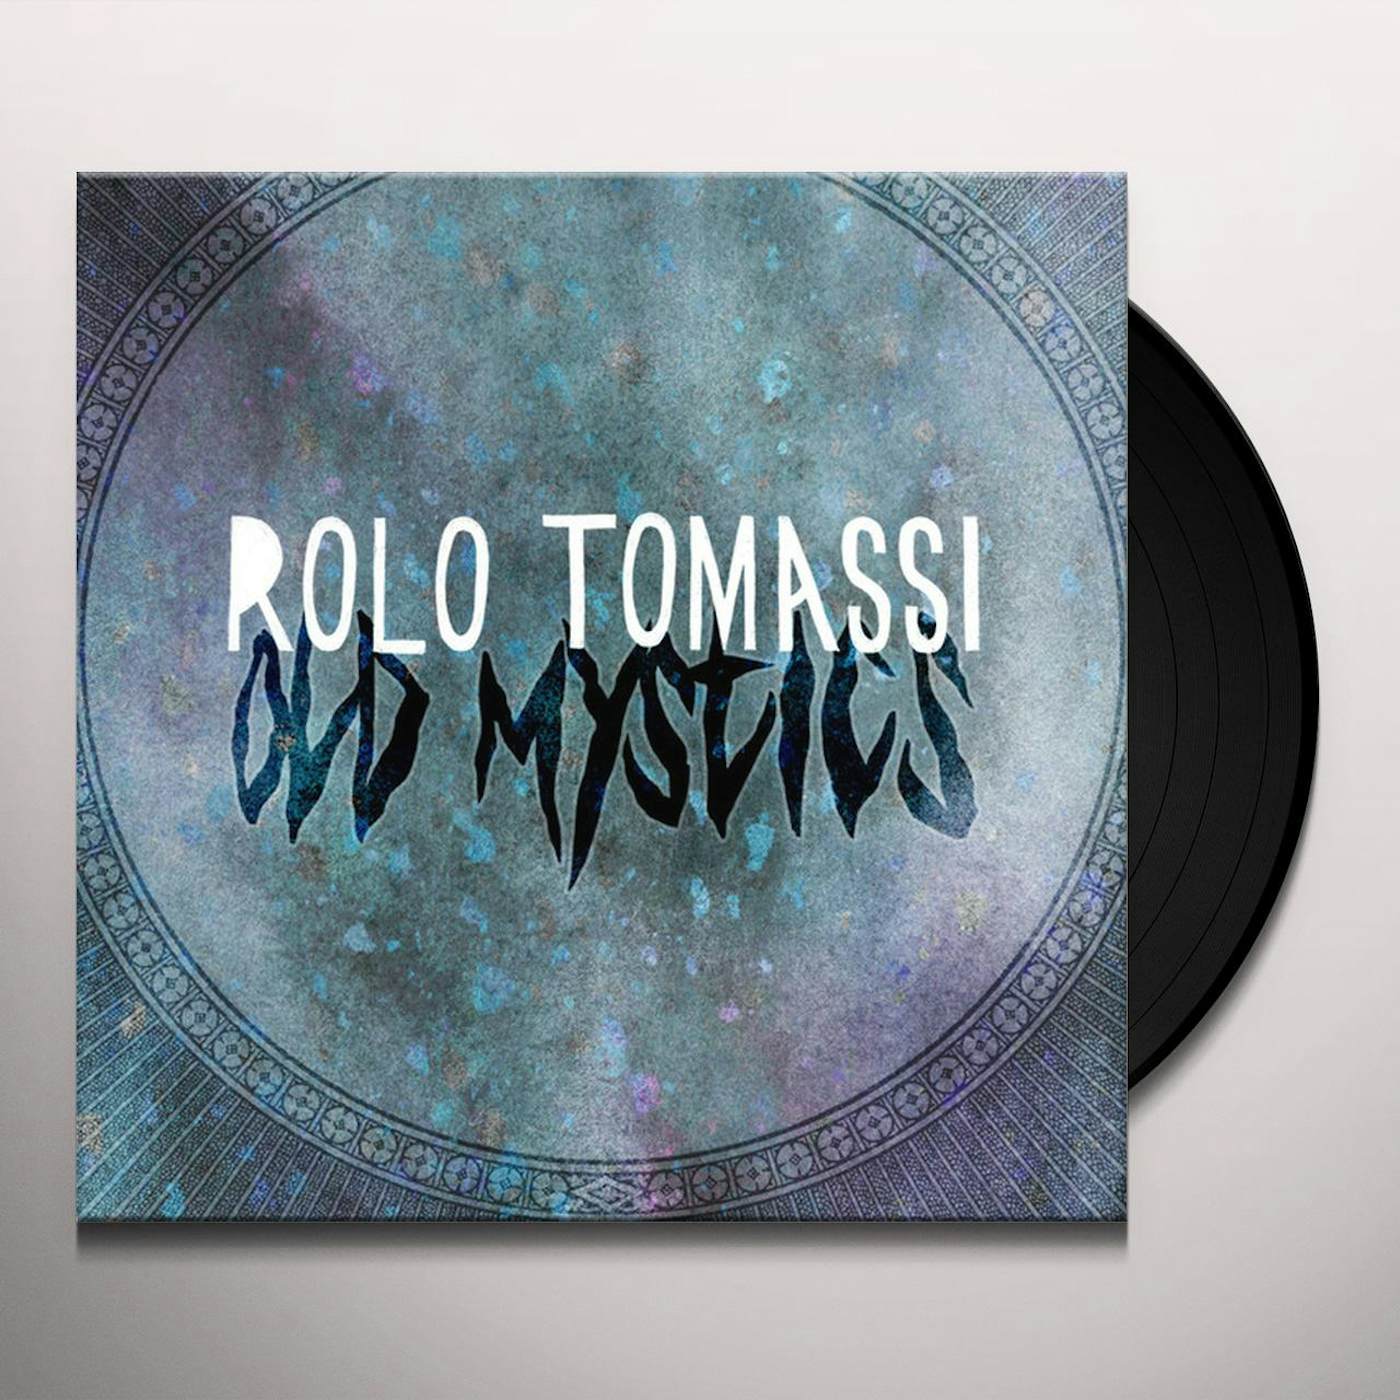 Rolo Tomassi Old Mystics Vinyl Record